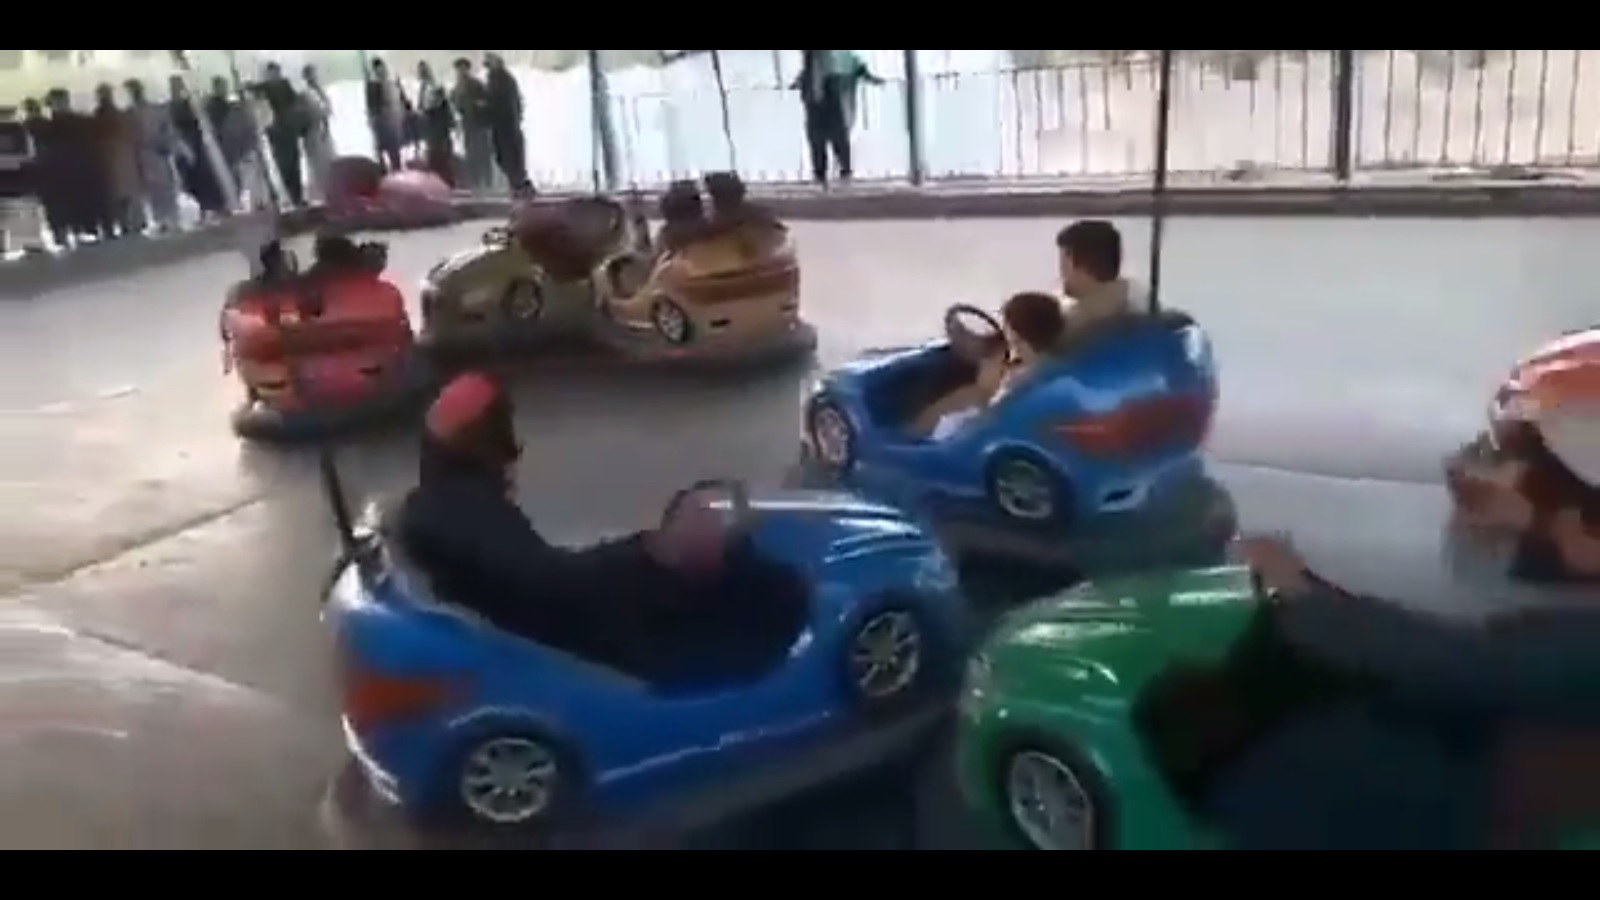 taliban in bumper cars